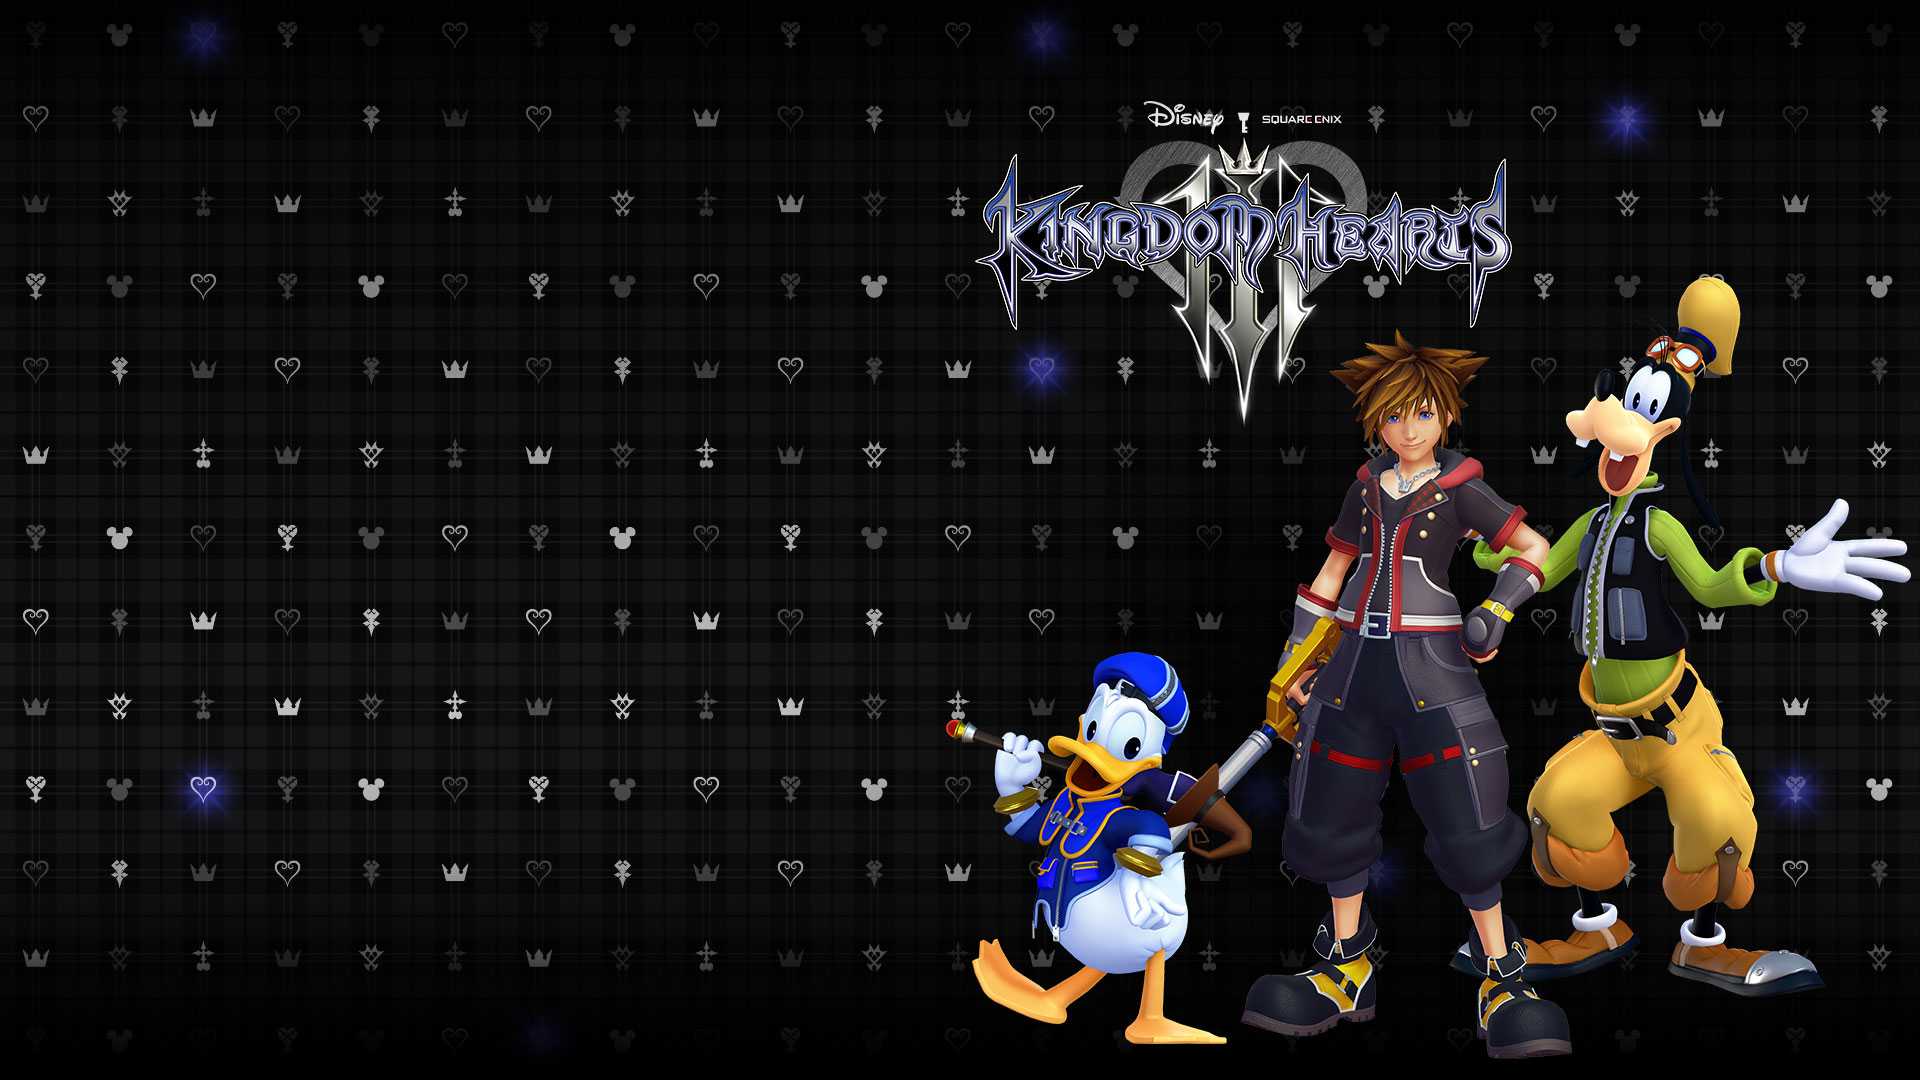 Black Kingdom Hearts Wallpaper 1